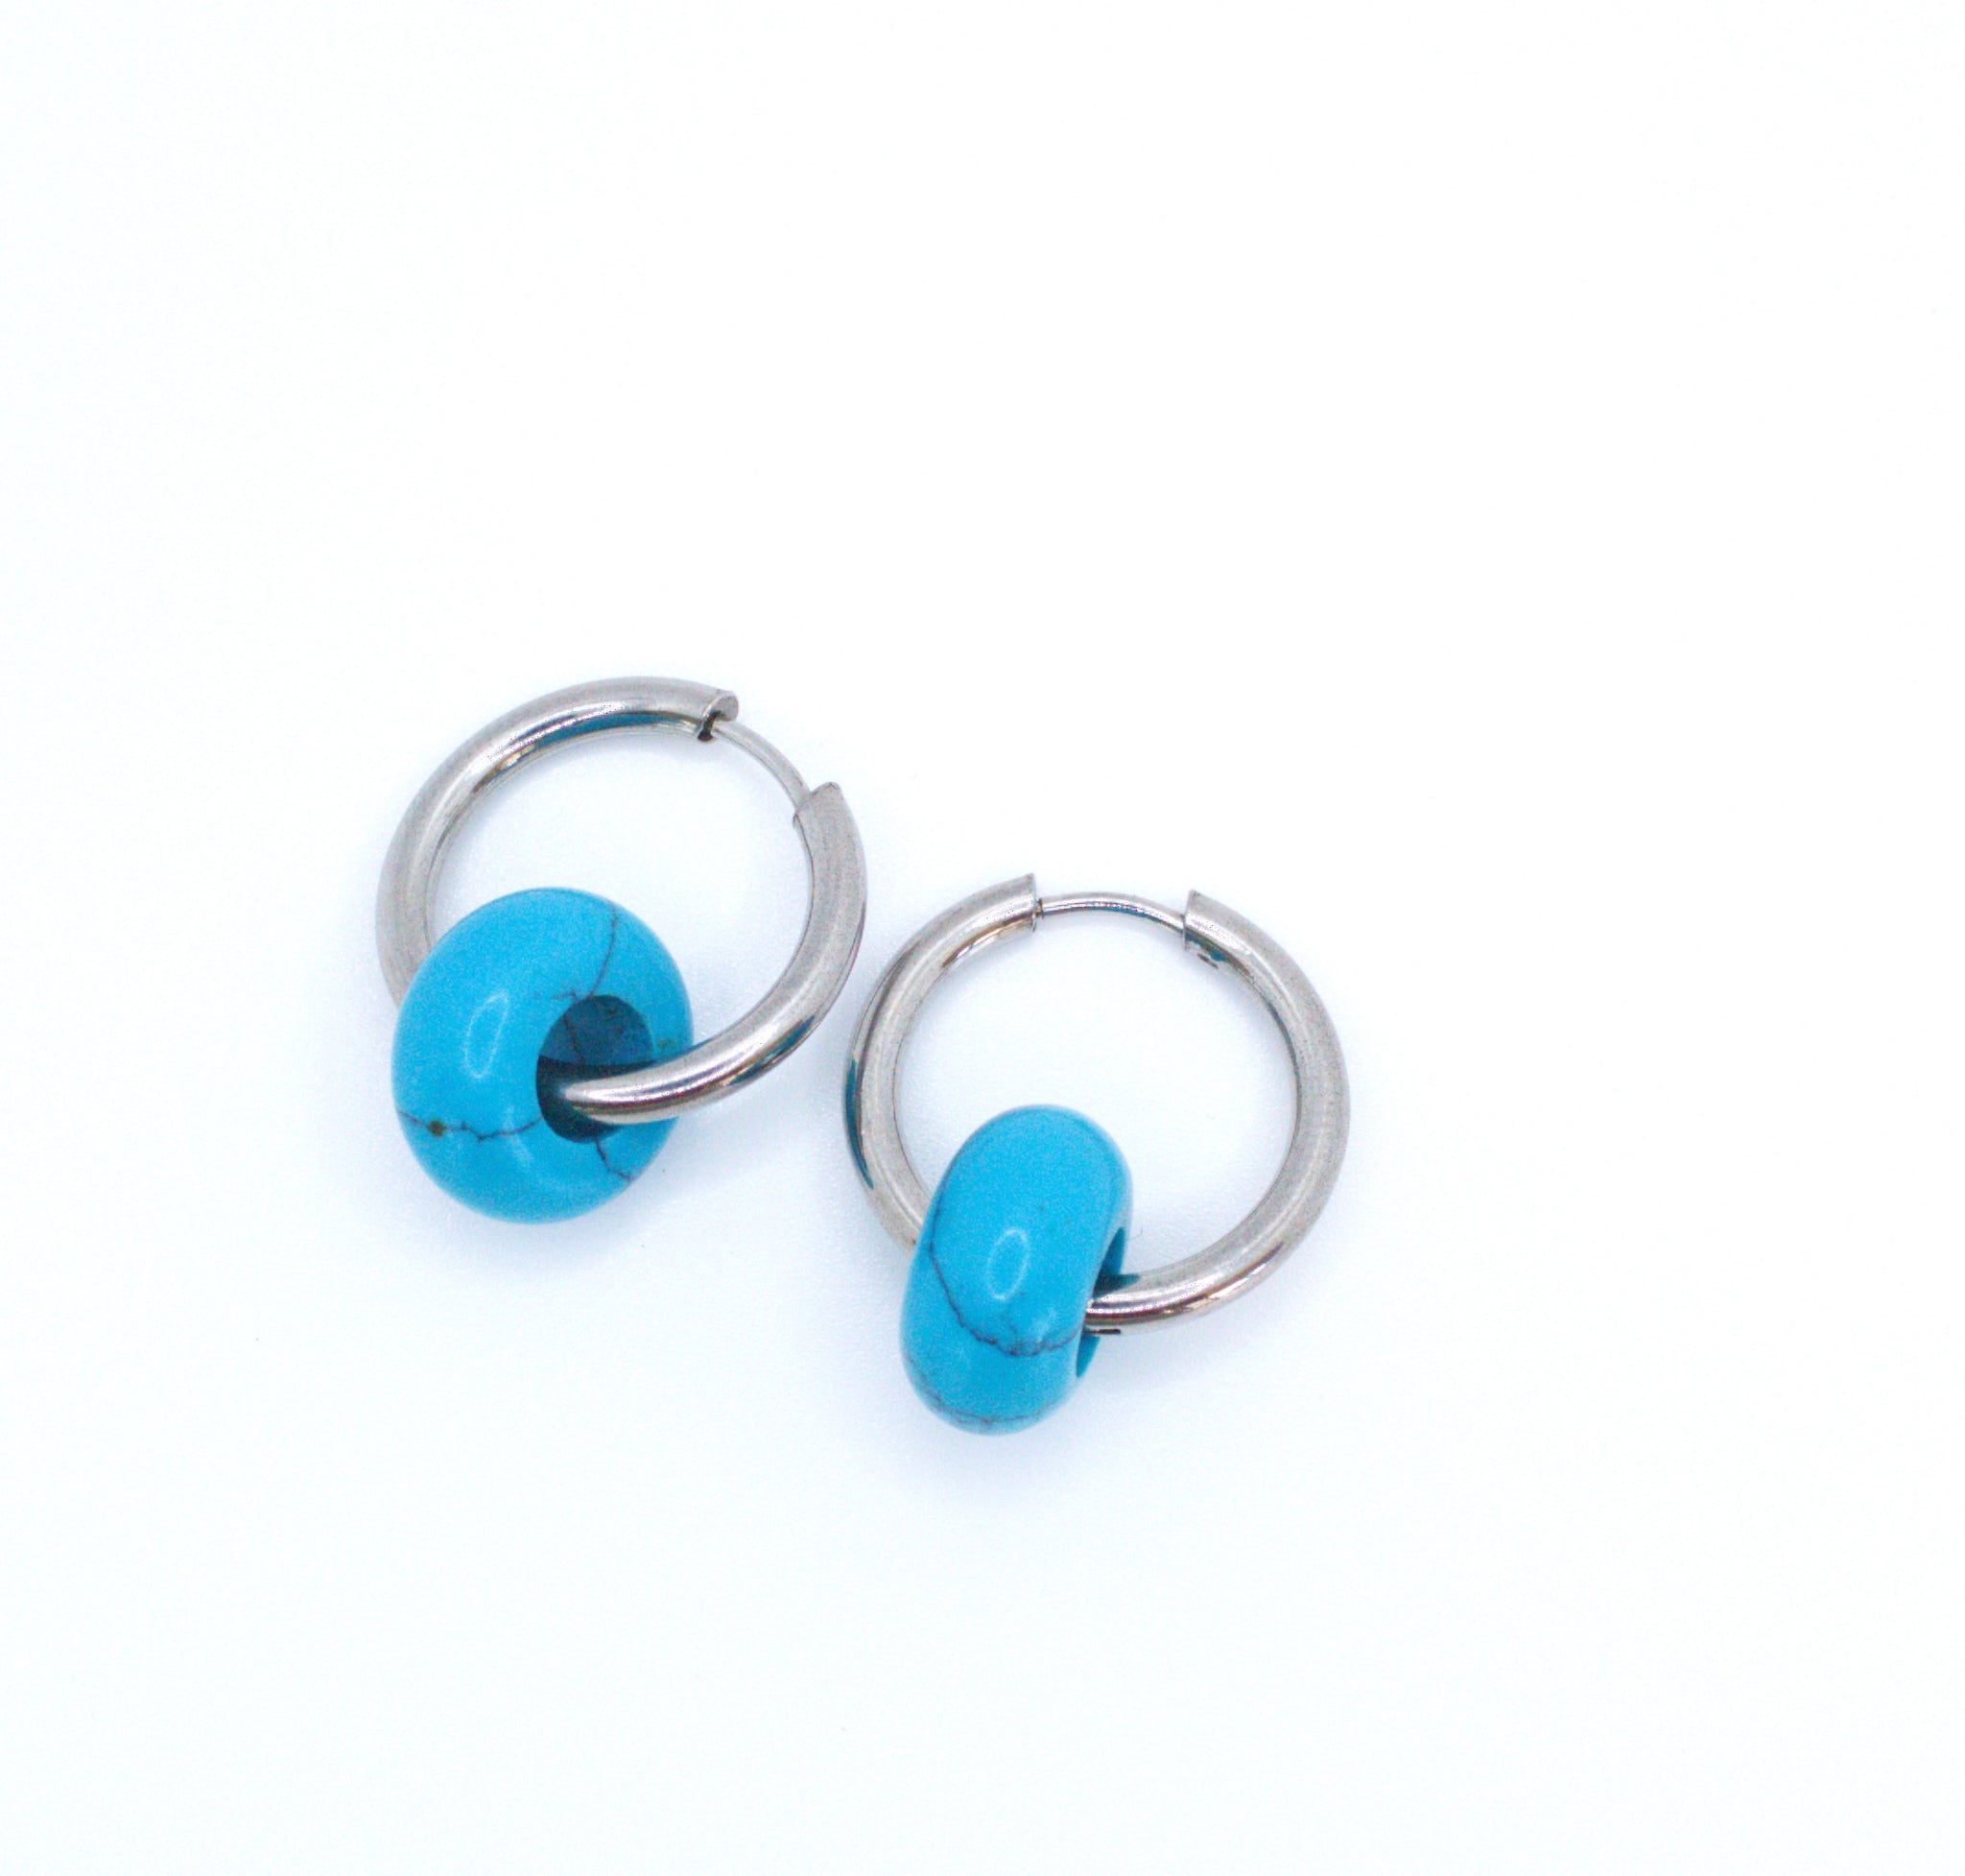 Earrings sunchasers hoop with semi precious stones